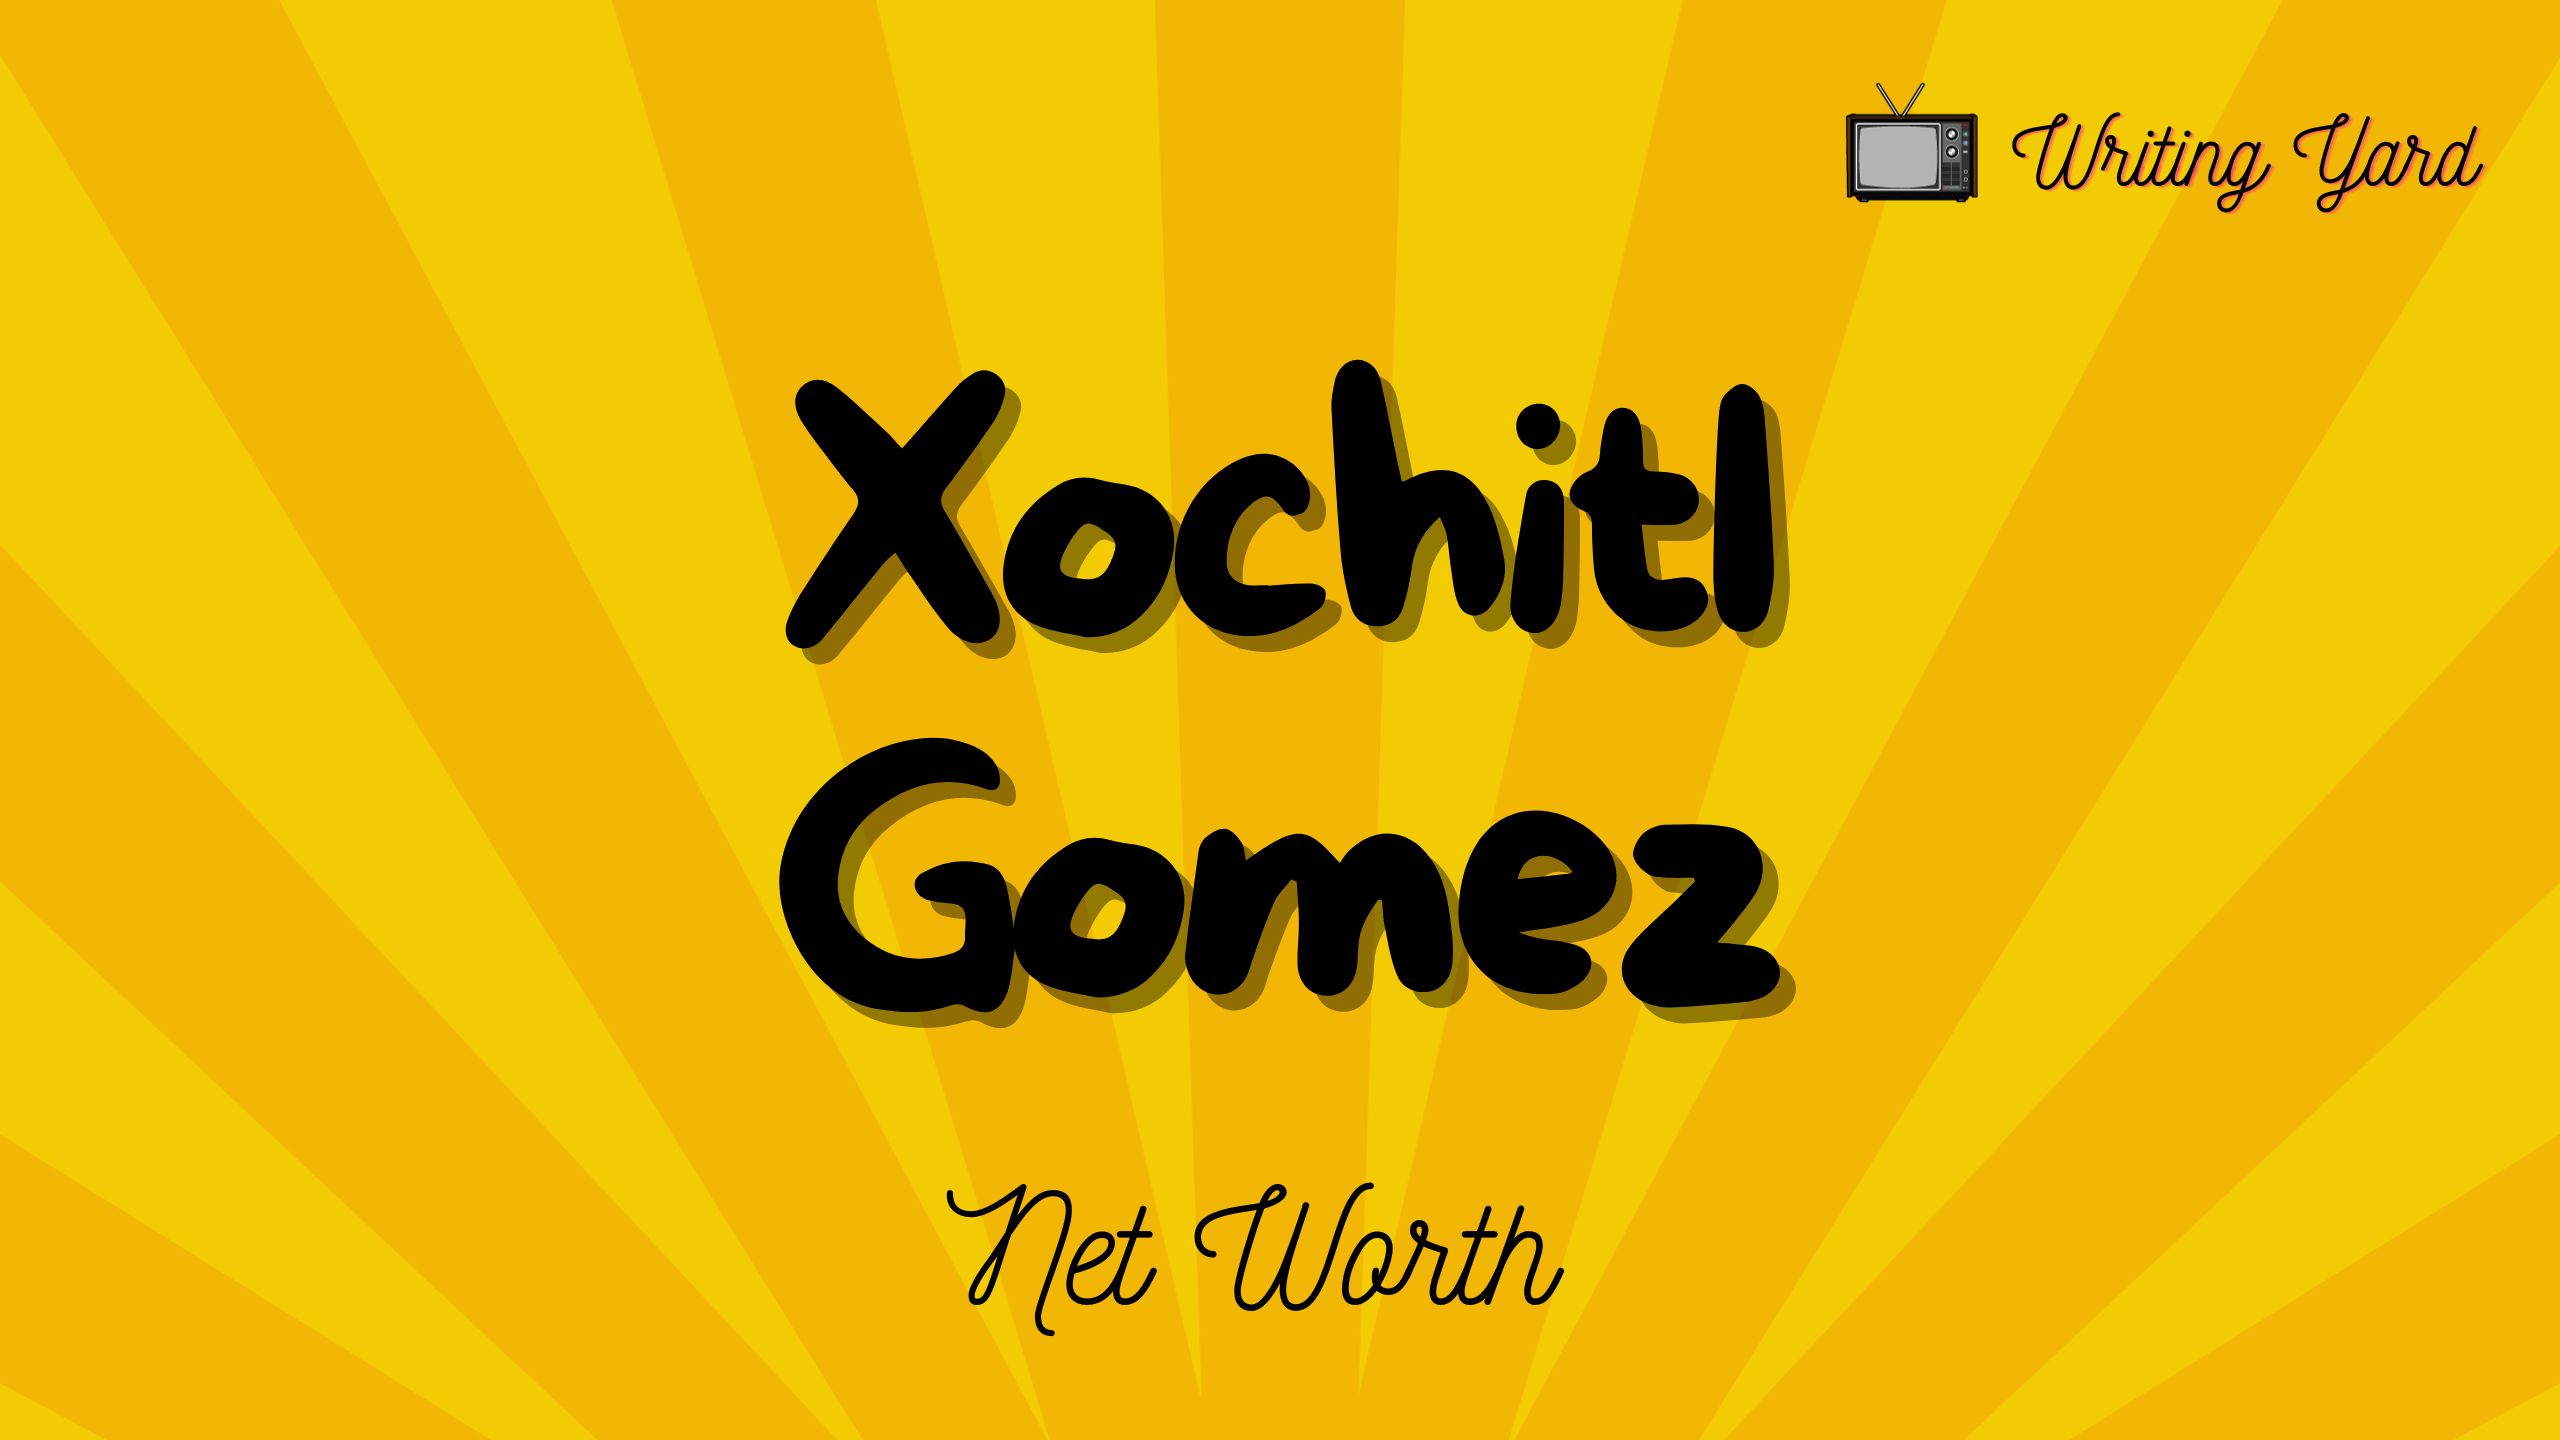 Xochitl Gomez Net Worth